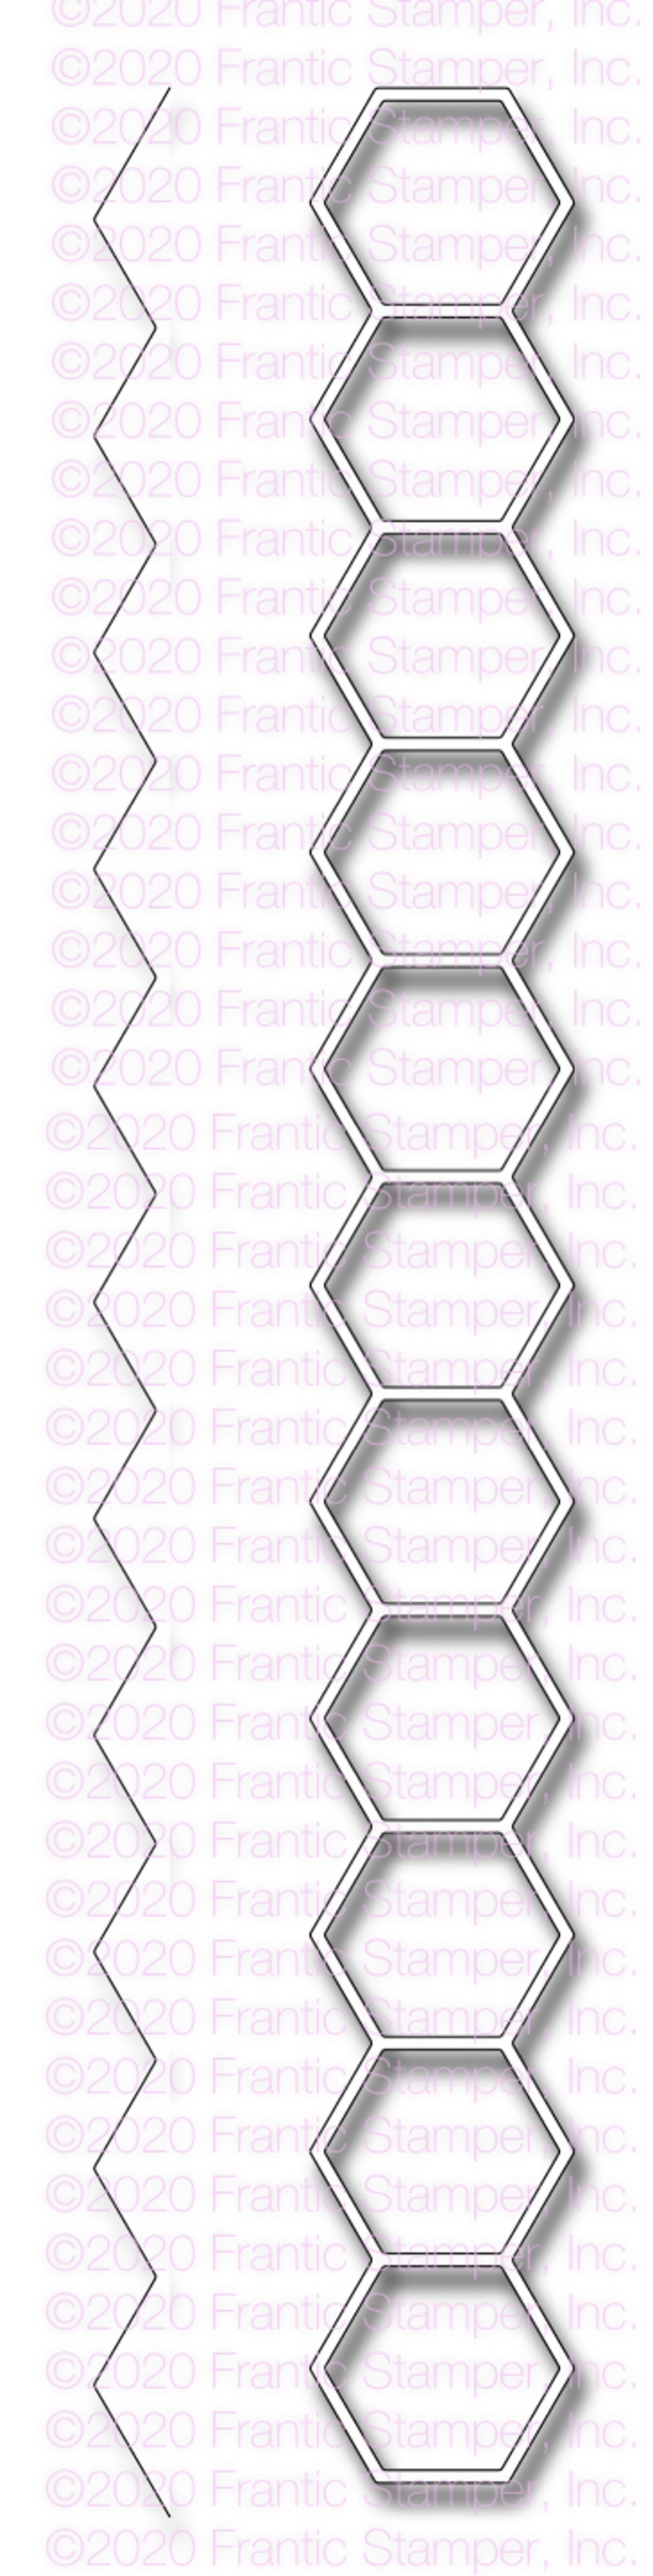 Frantic Stamper Precision Die - Slimline Hexagon Borders